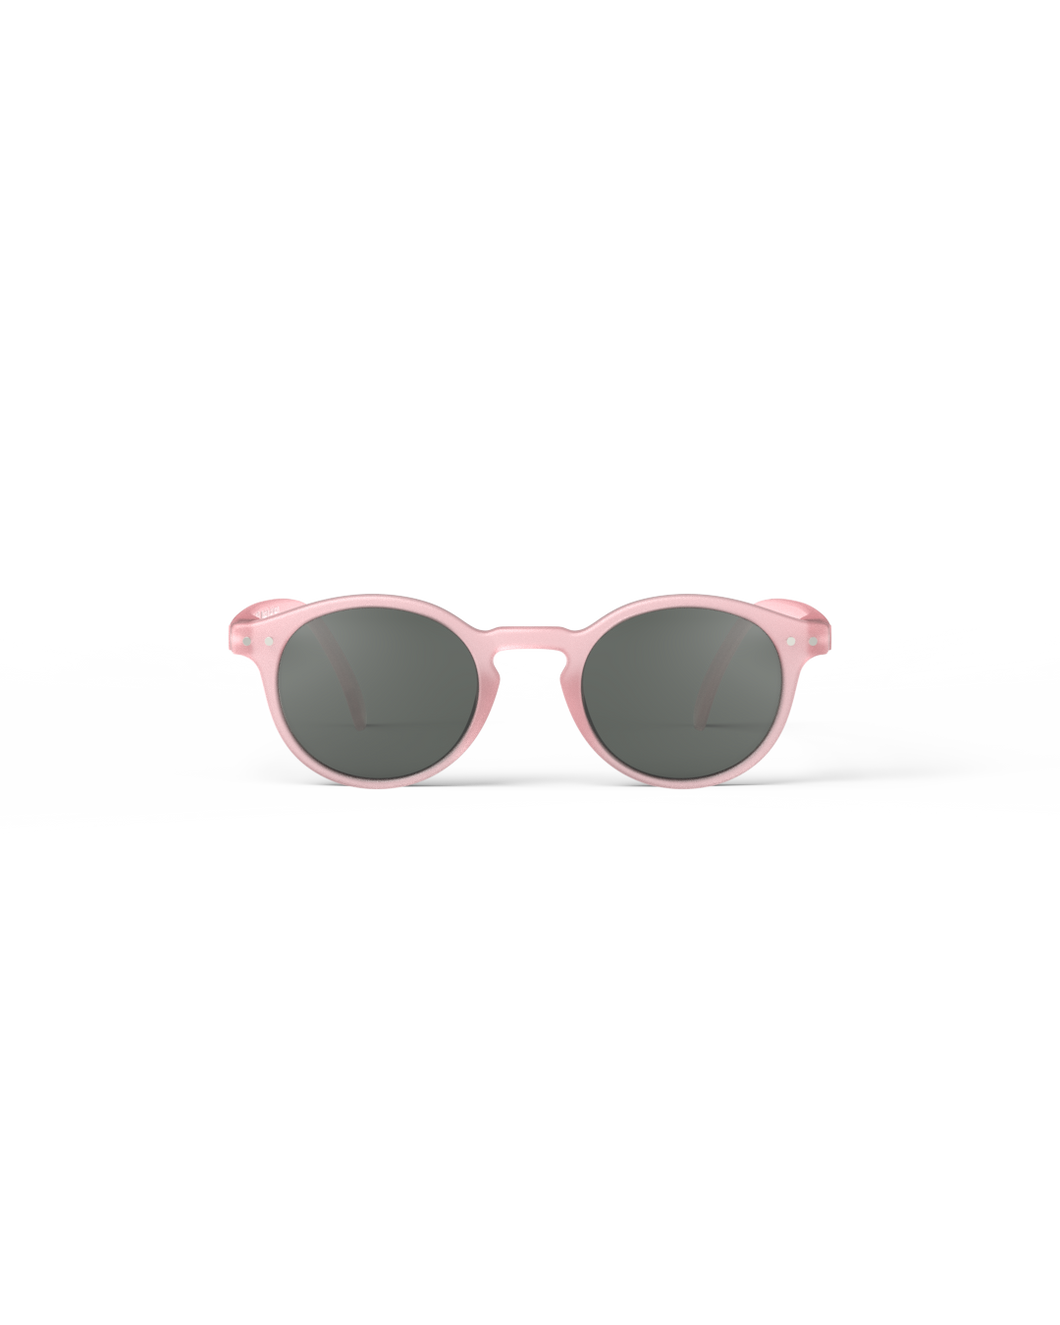 Izipizi Sonnenbrille Young Adult 11 - 16 Jahre Pink Grey Lenses #h